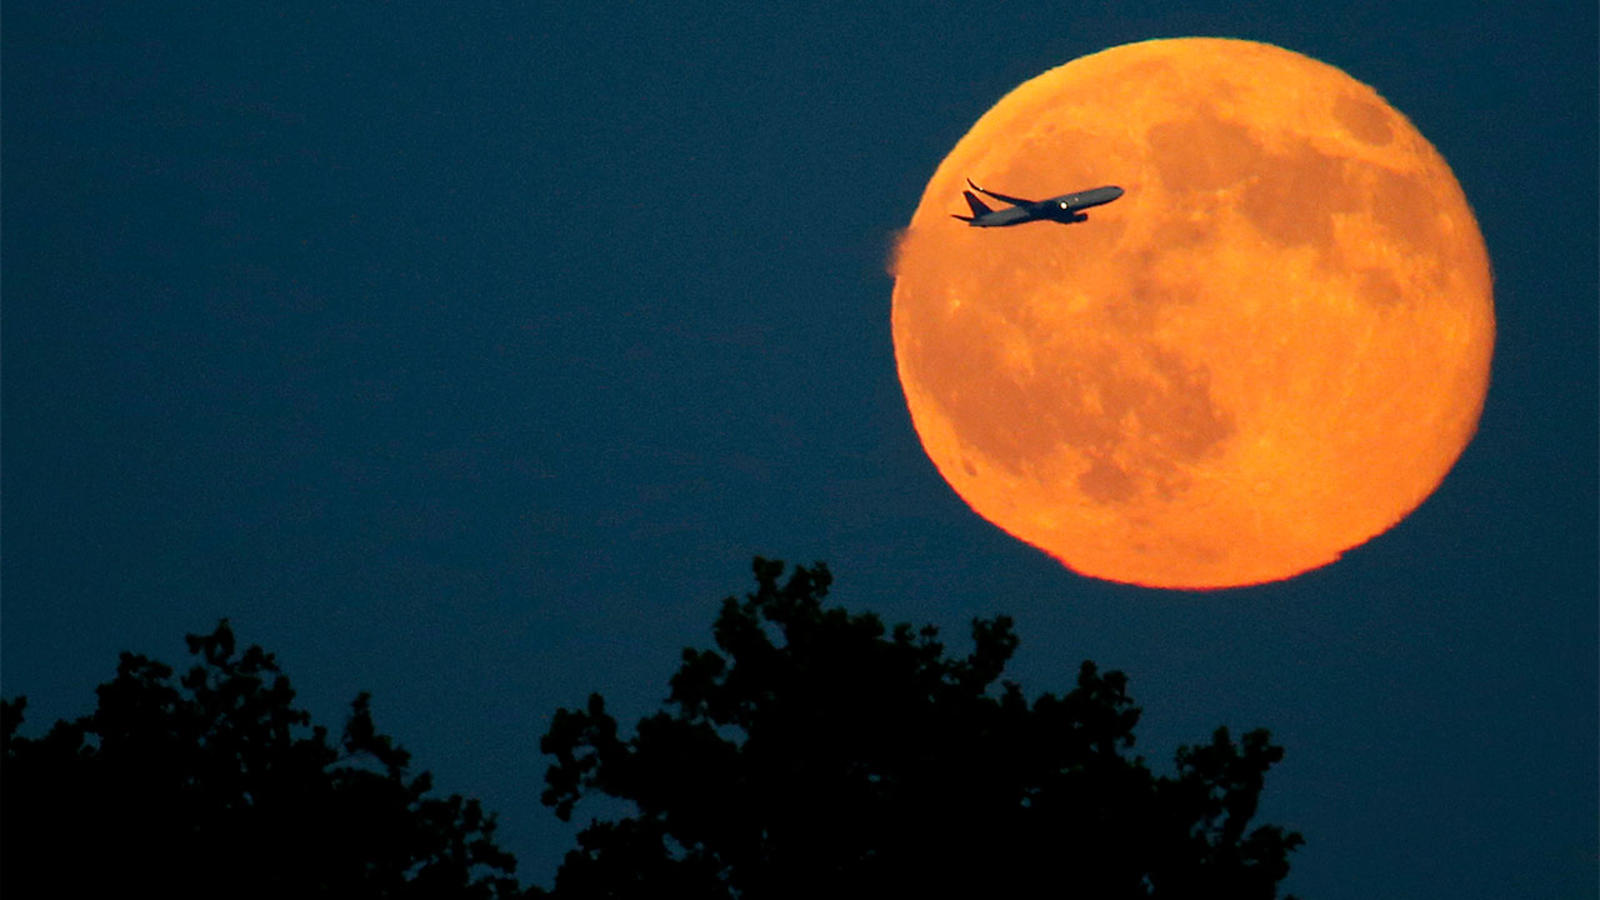 Halloween 2020 Full Moon: A rare blue moon lights up the sky